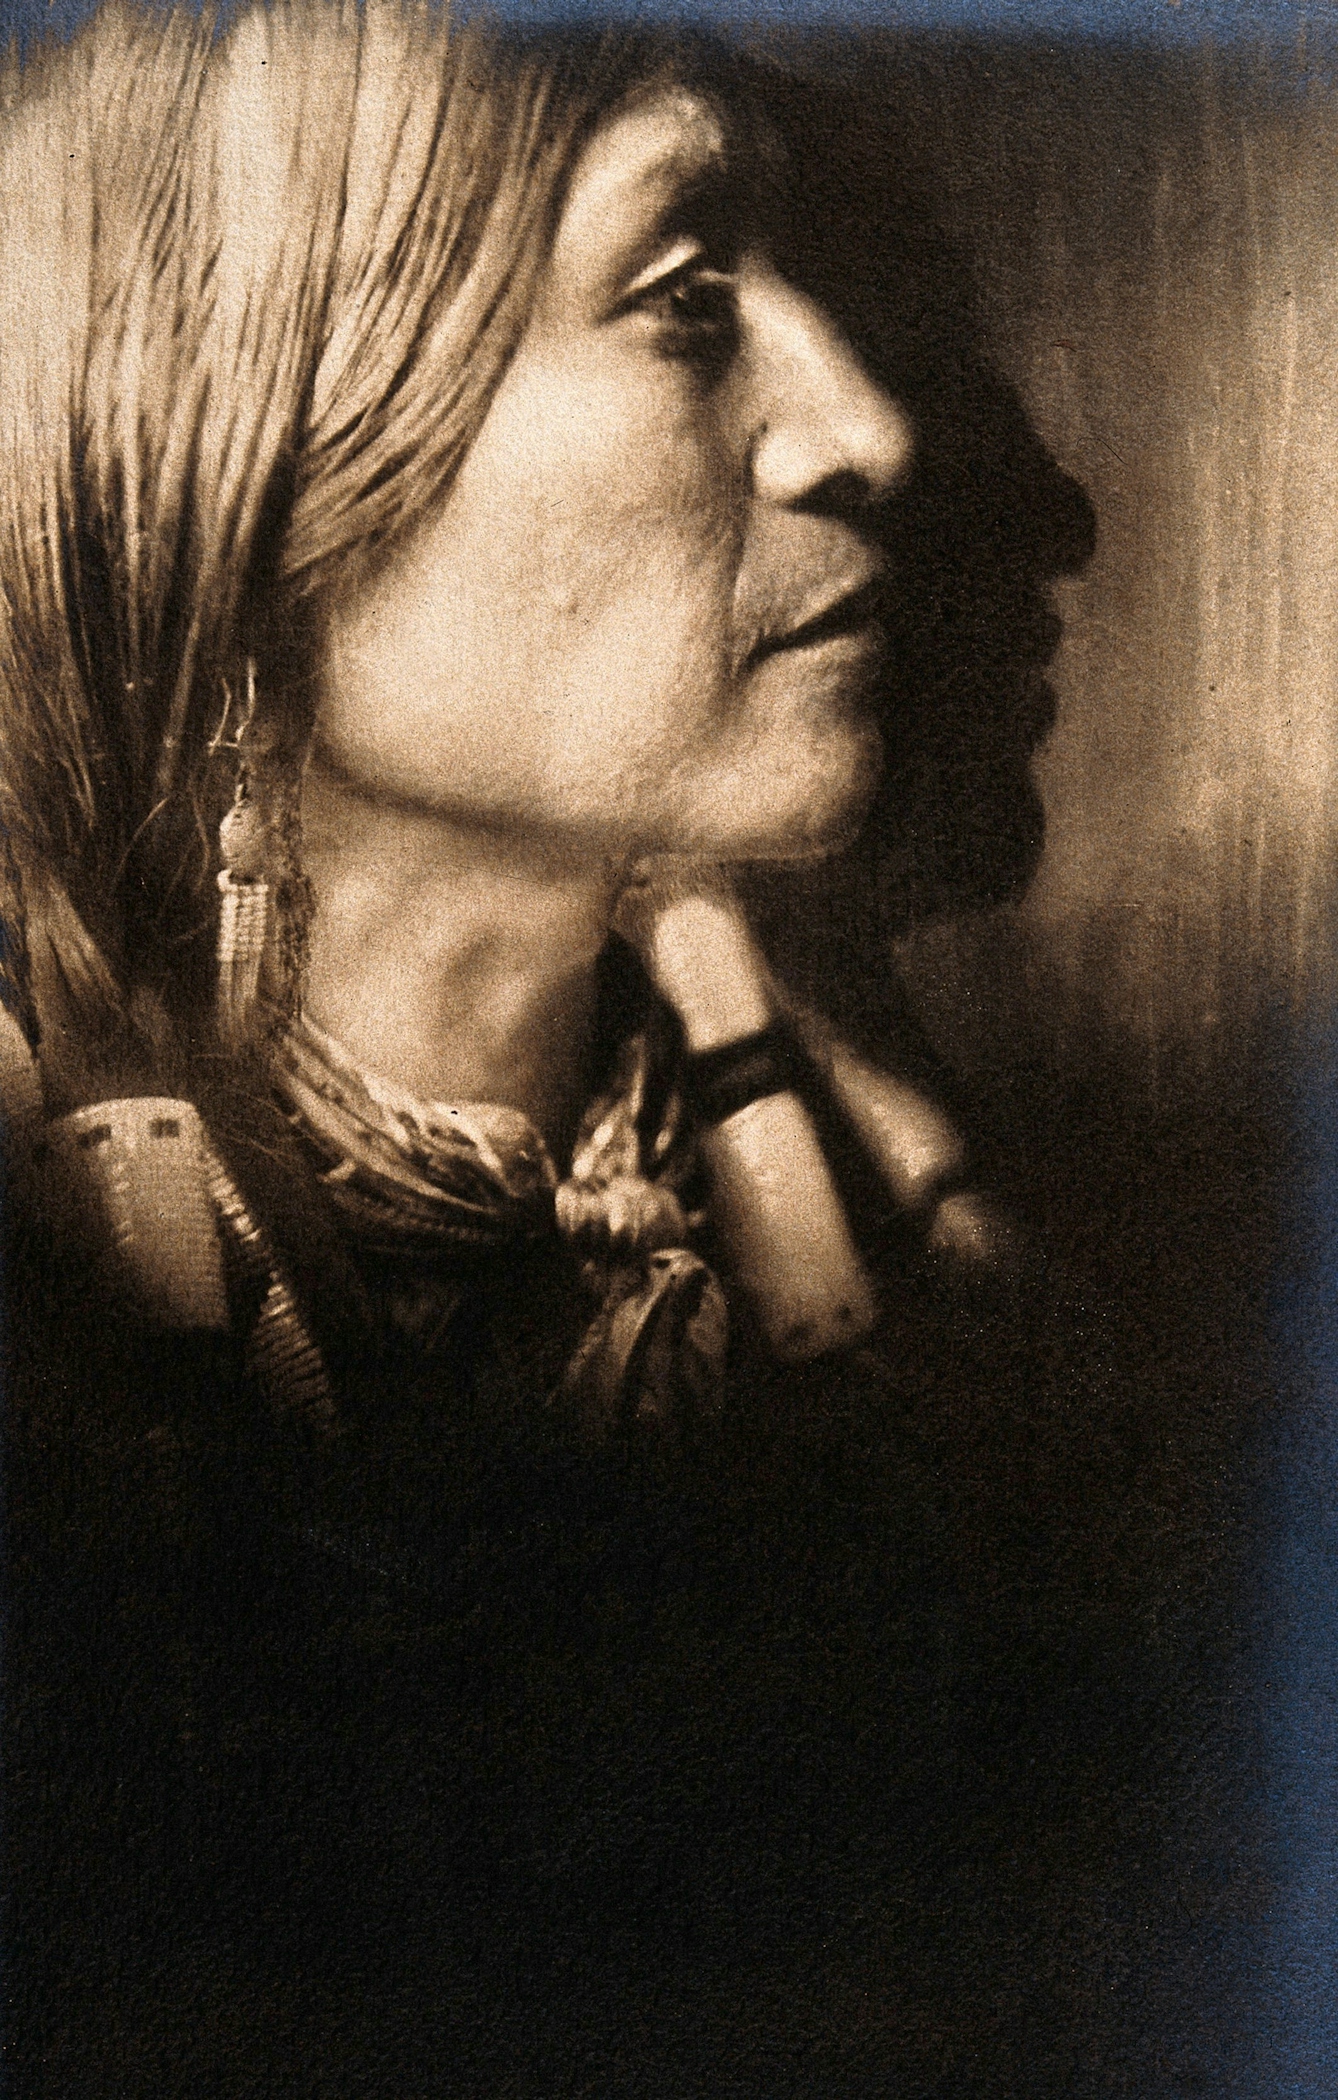  Jicarilla Indian Chief, in ceremonial dress